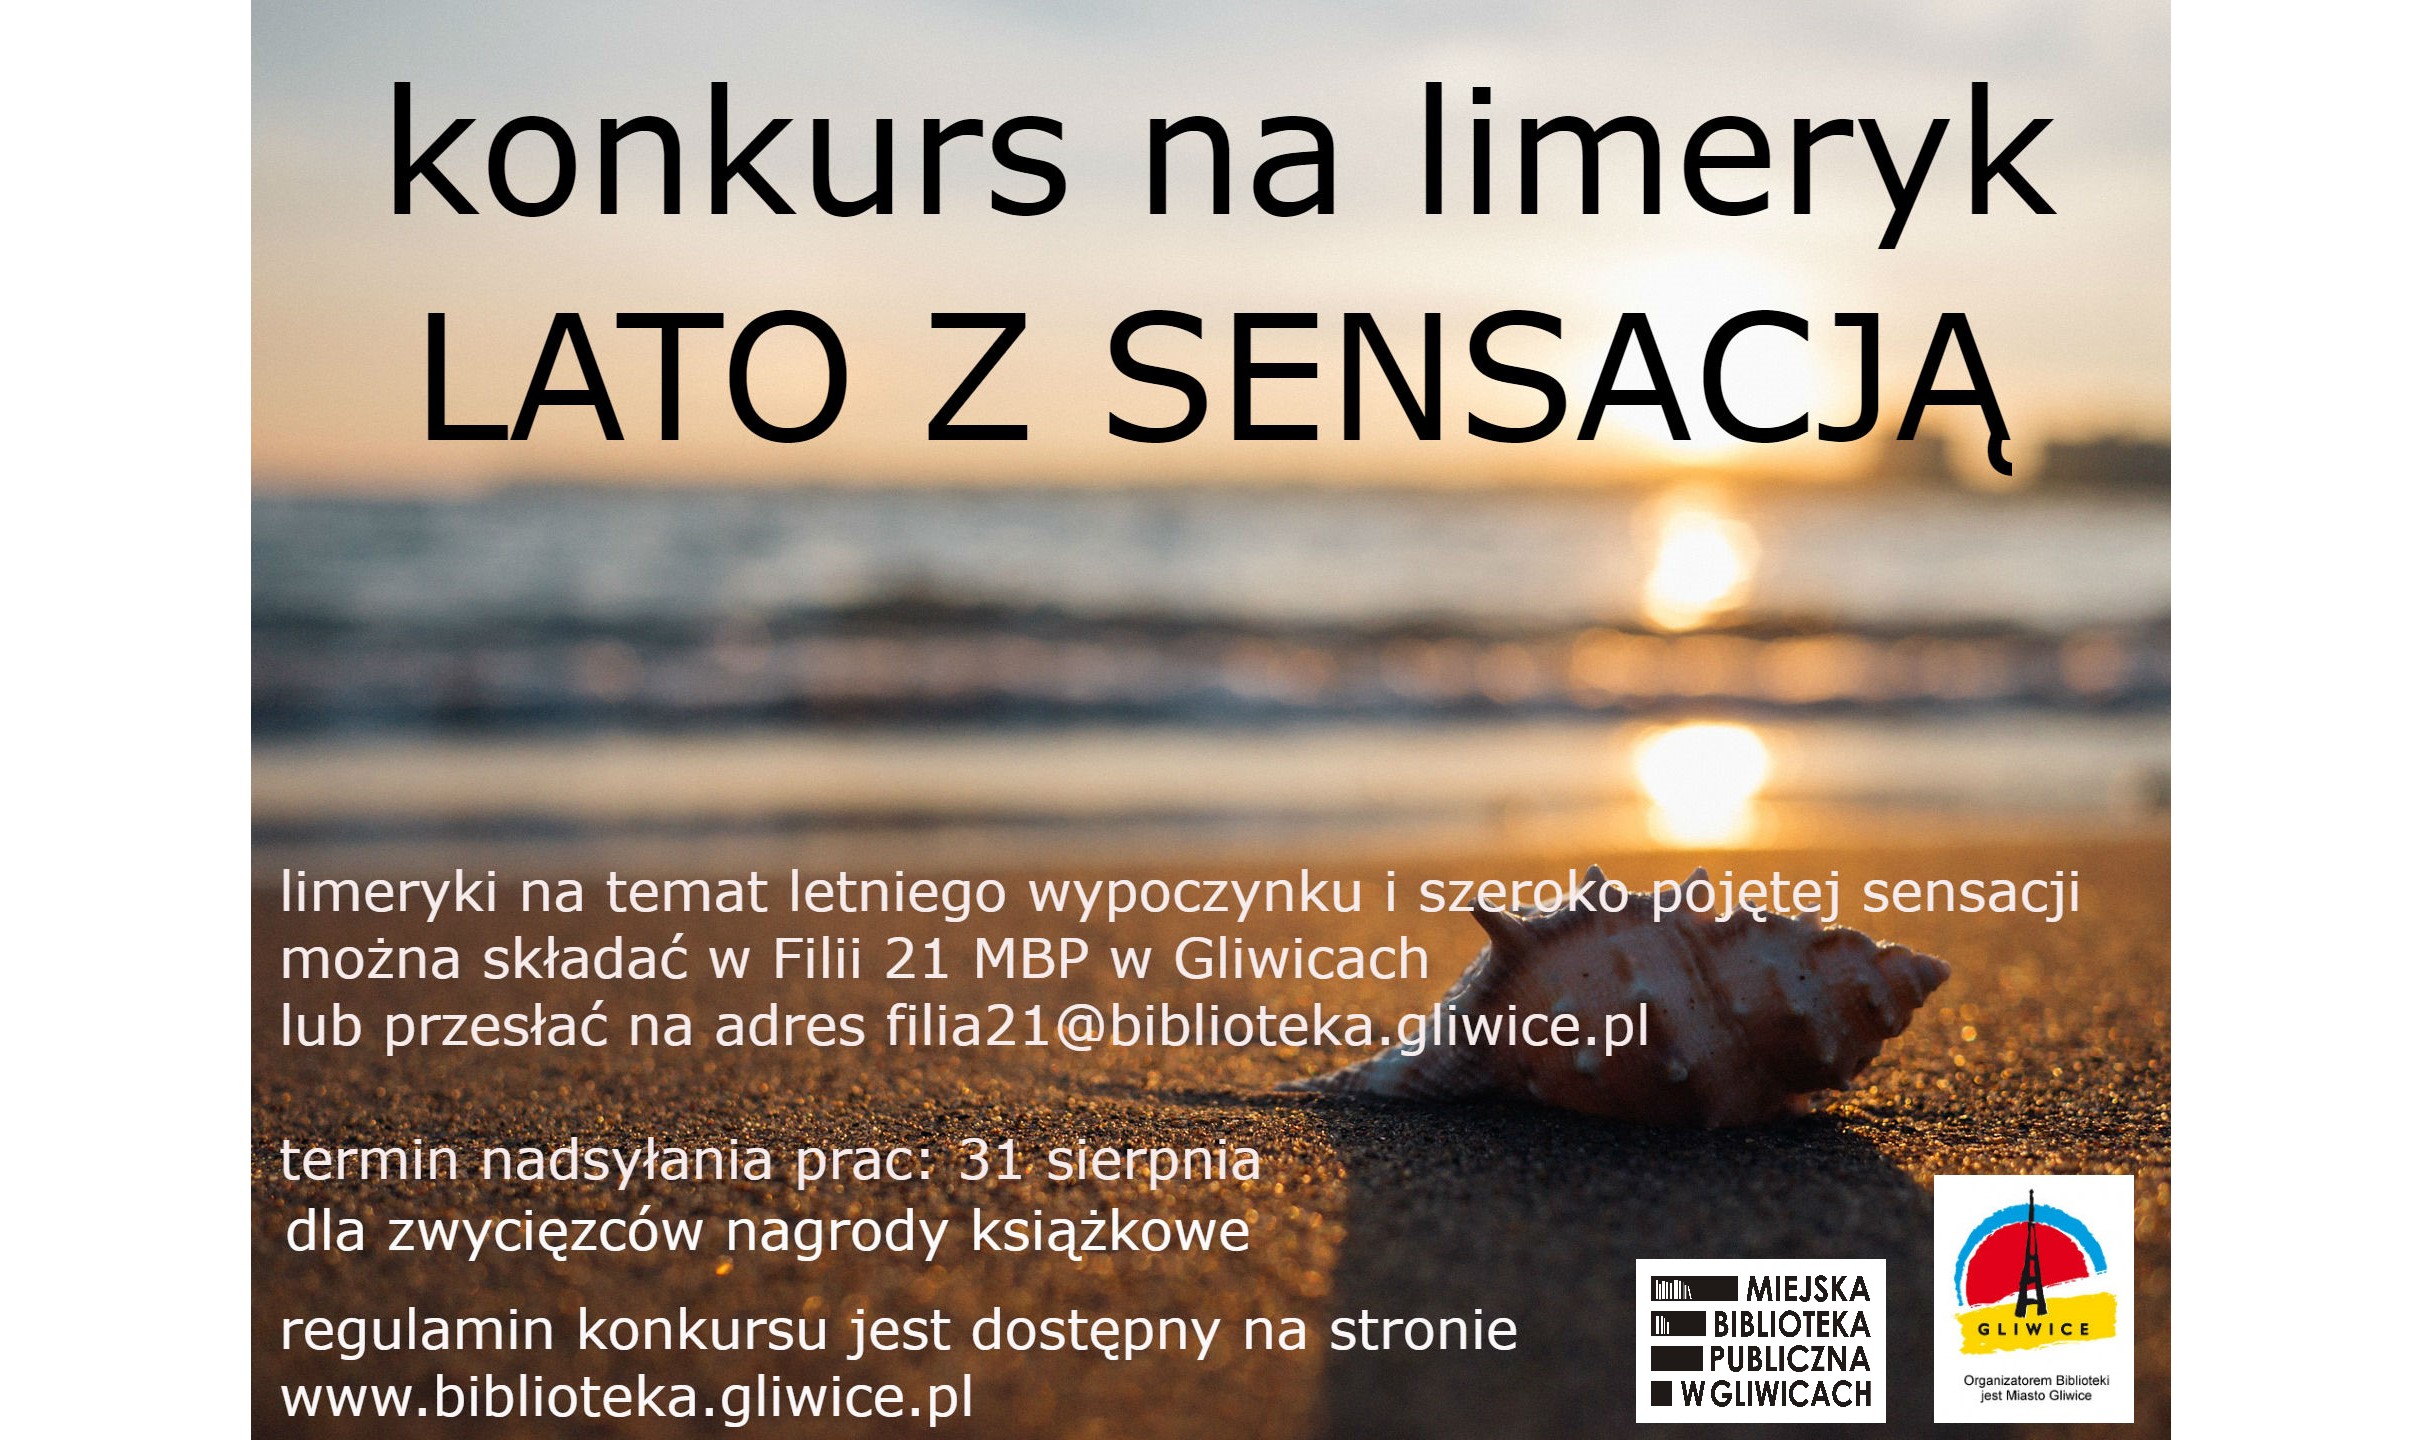 "Lato z sensacją" - konkurs na limeryk